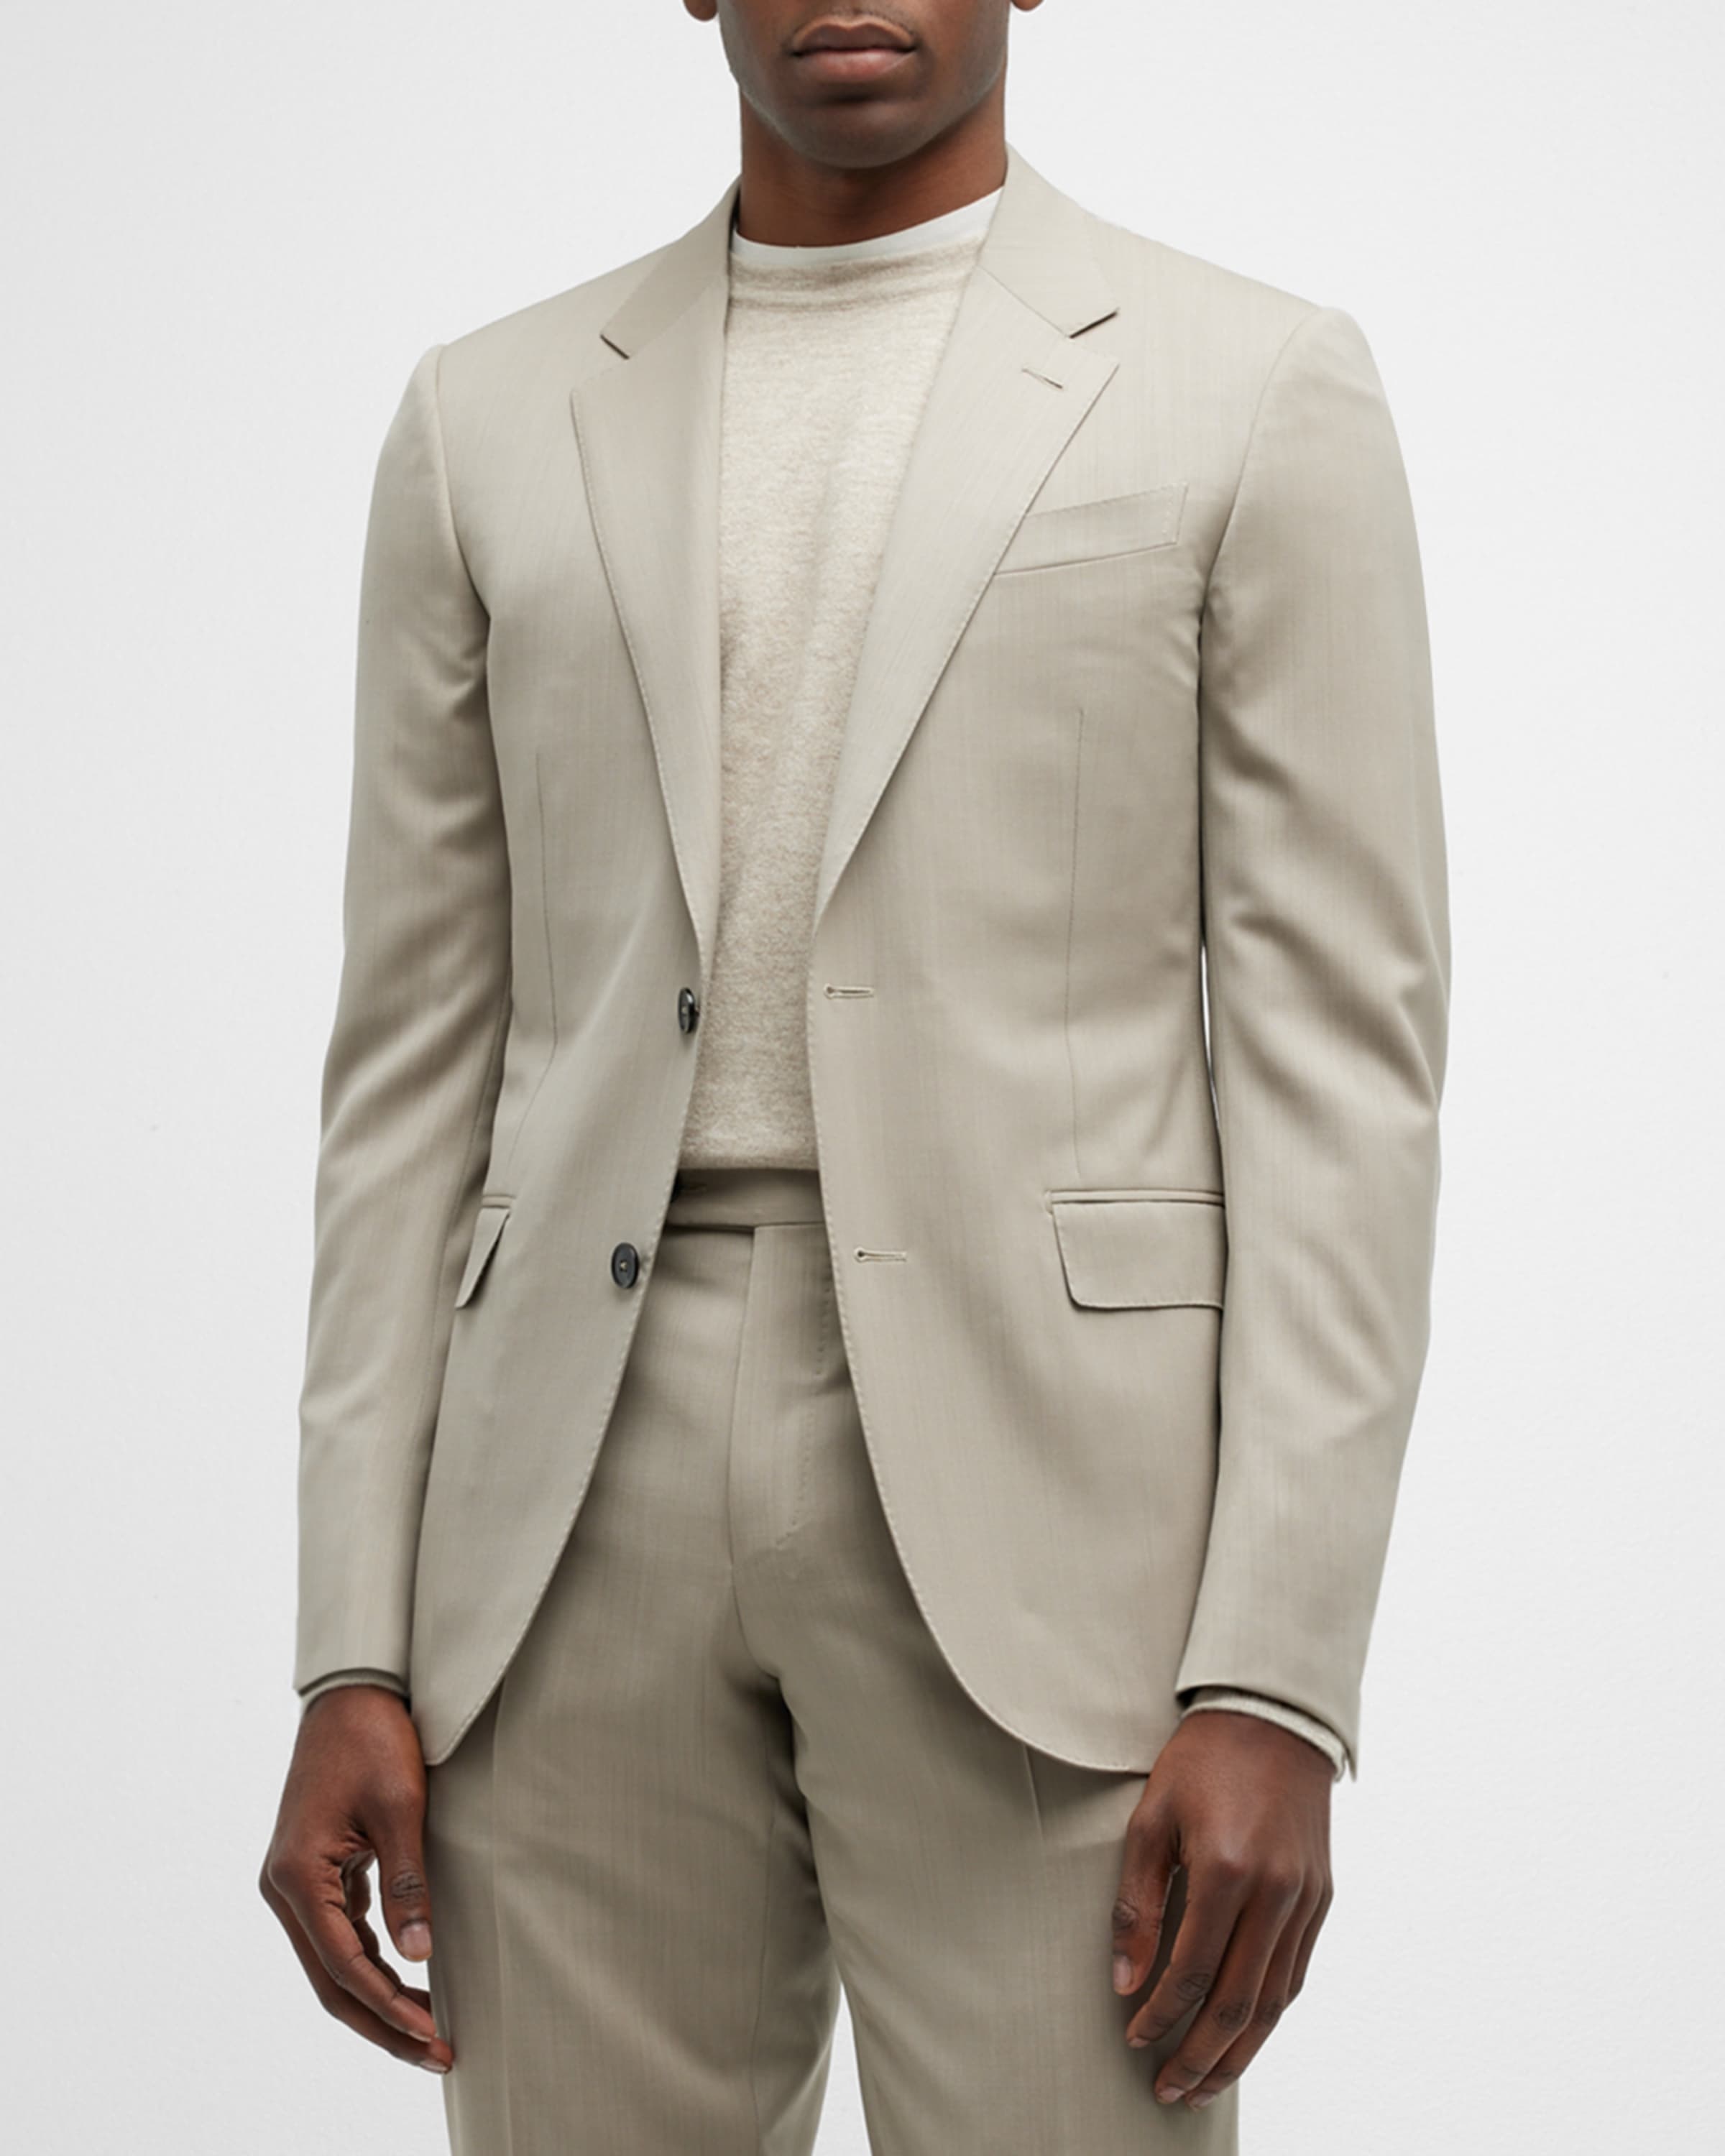 Men's Solid Wool Twill Suit - 1